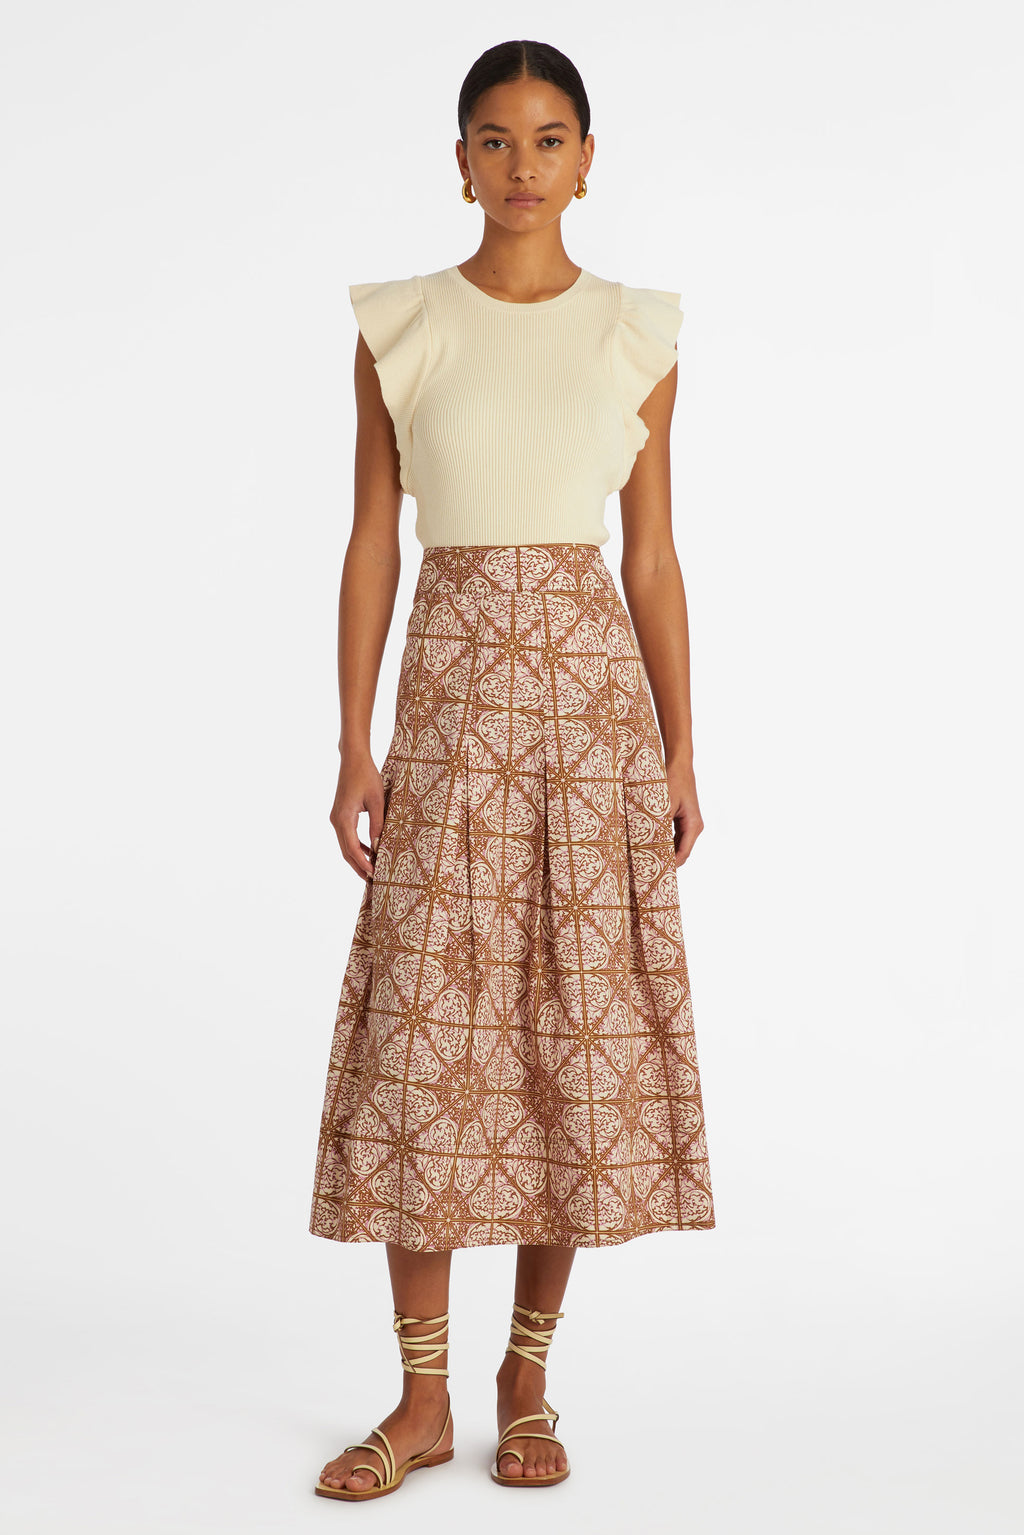 Pink and brown mosaic tile printed maxi skirt